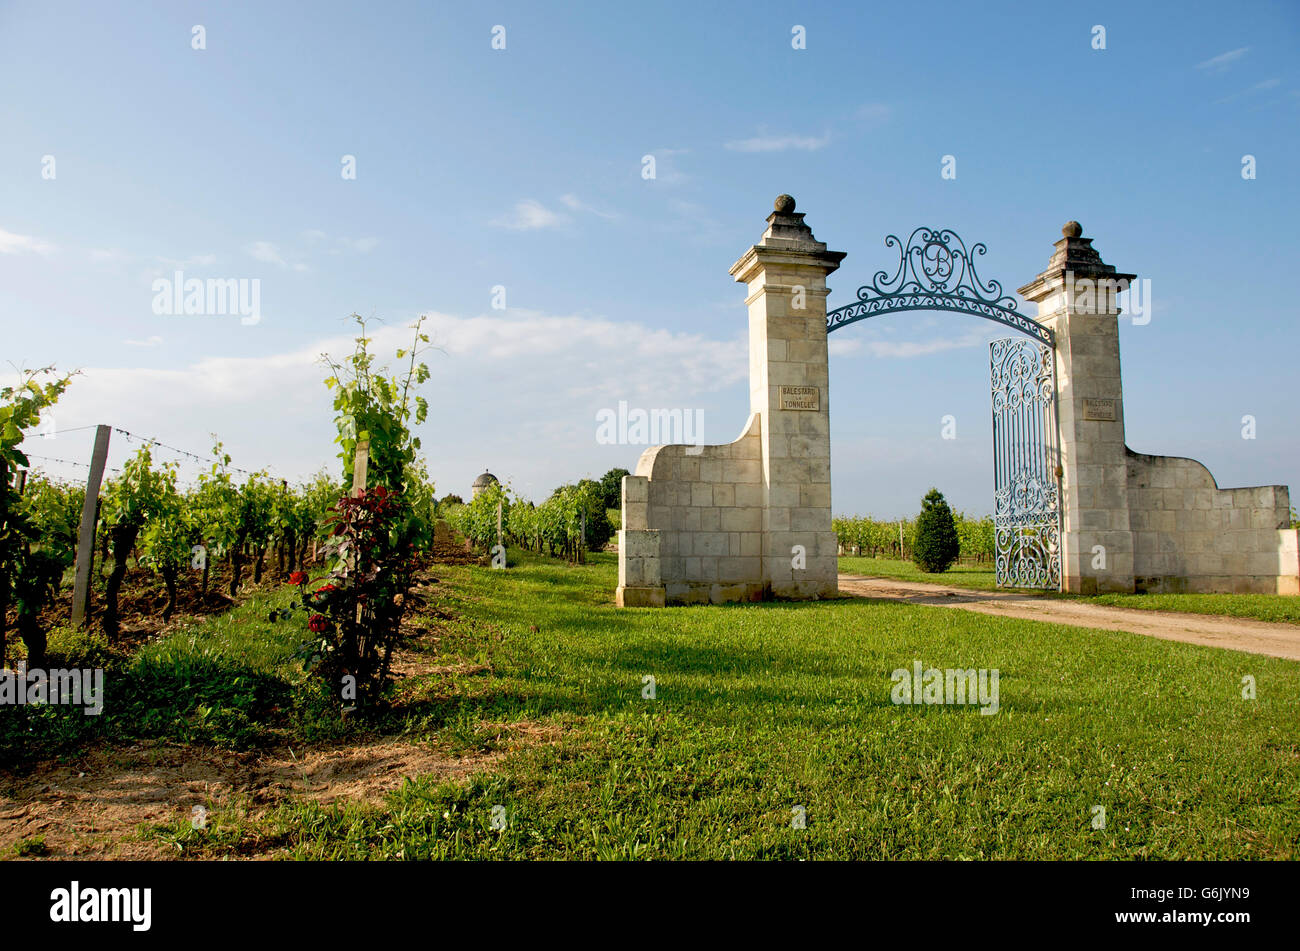 Entrance of a vineyard, Chateau Balestard La Tonnelle, at St Emilion, Gironde, France, Europe Stock Photo